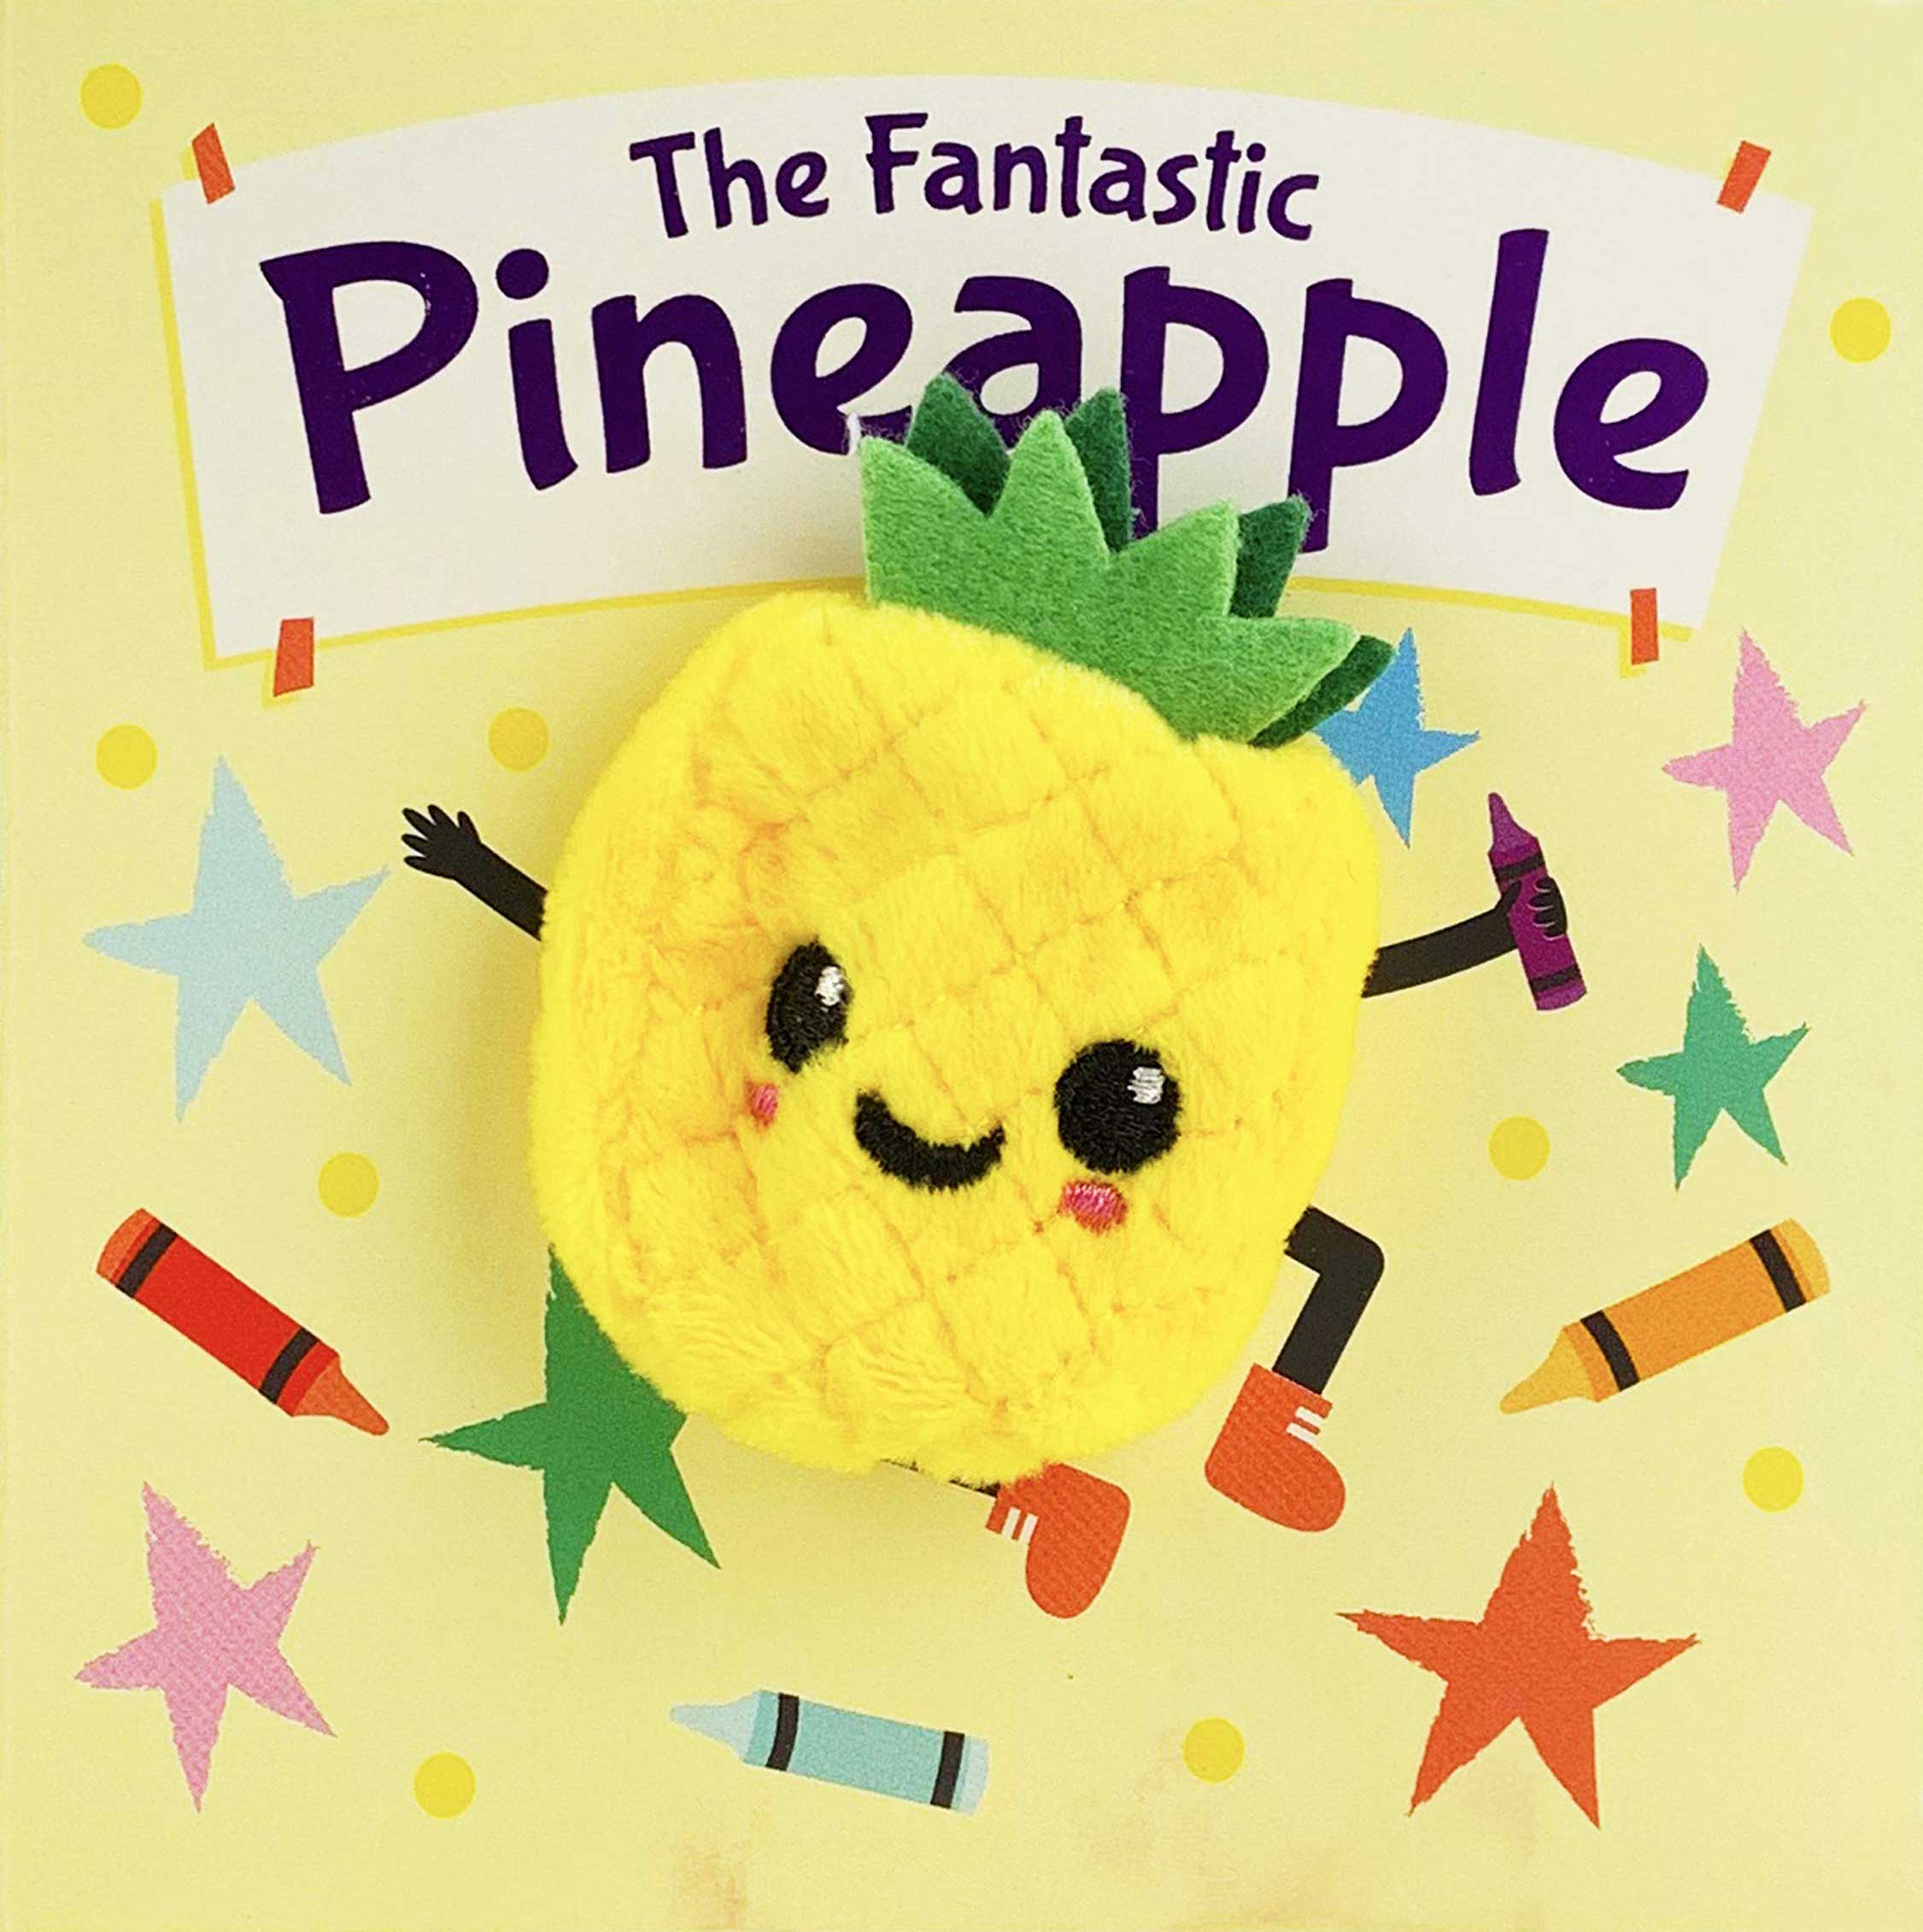 The fantastic pineapple